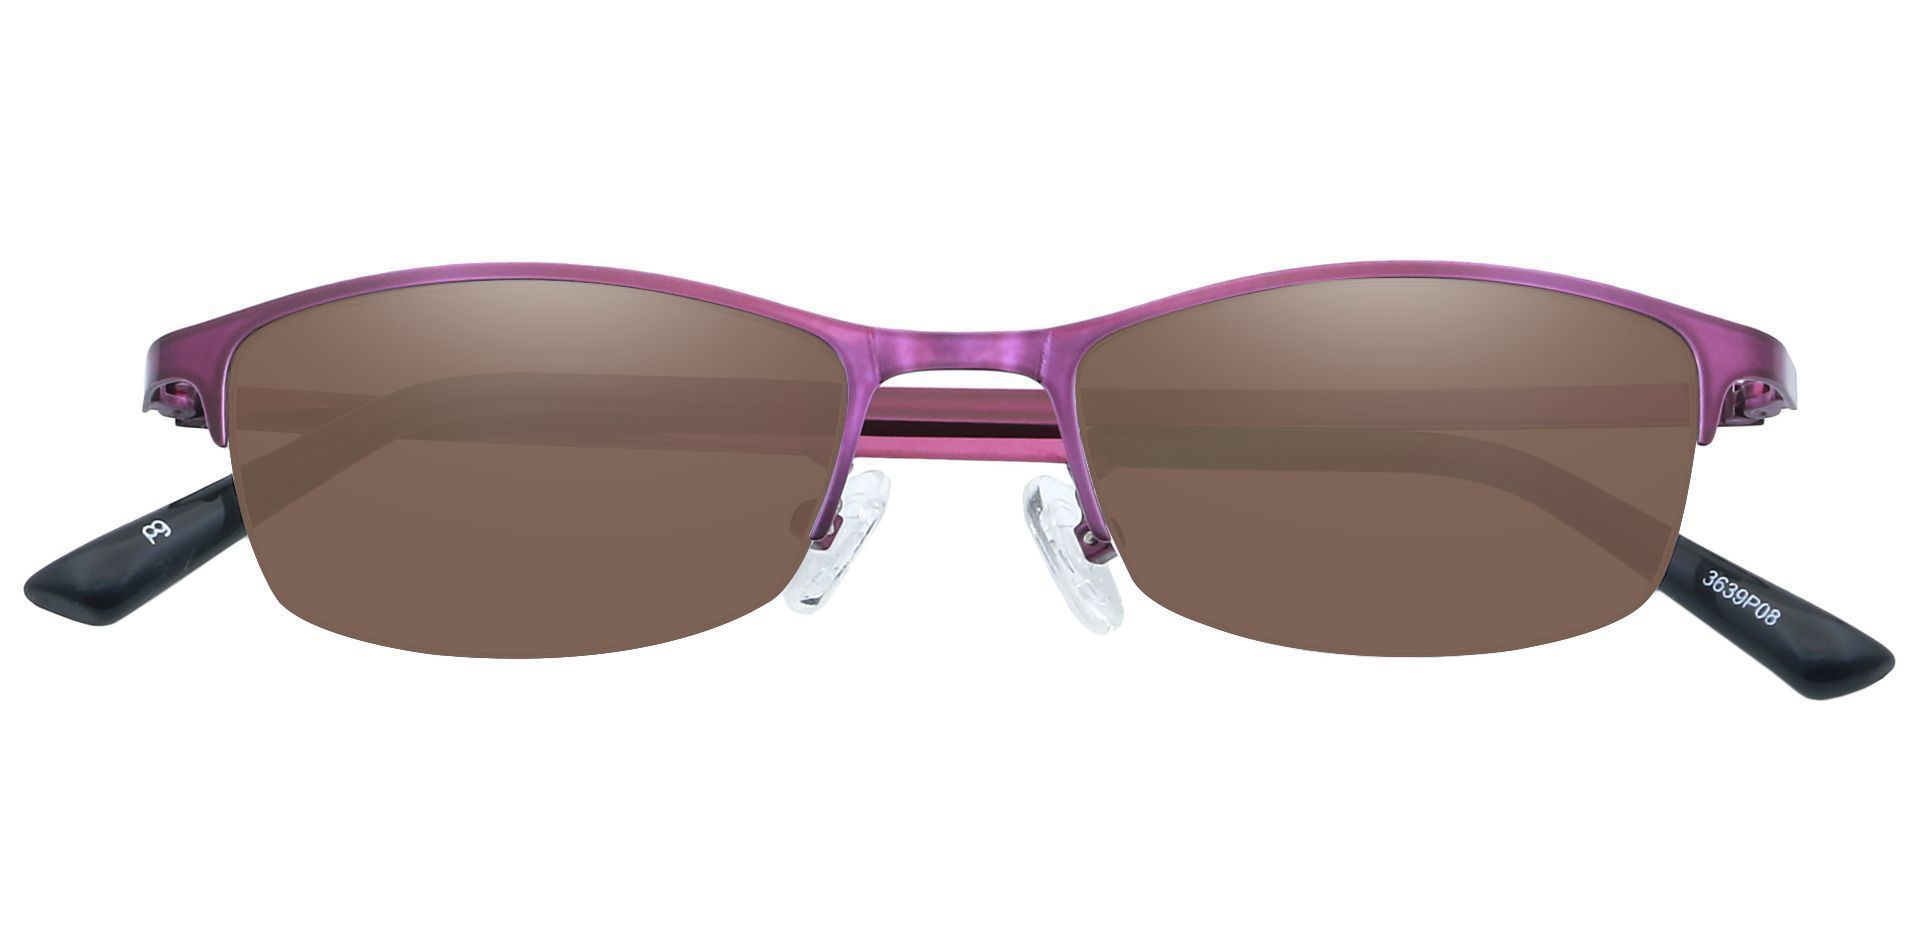 Eliza Rectangle Non-Rx Sunglasses -  Purple Frame With Brown Lenses